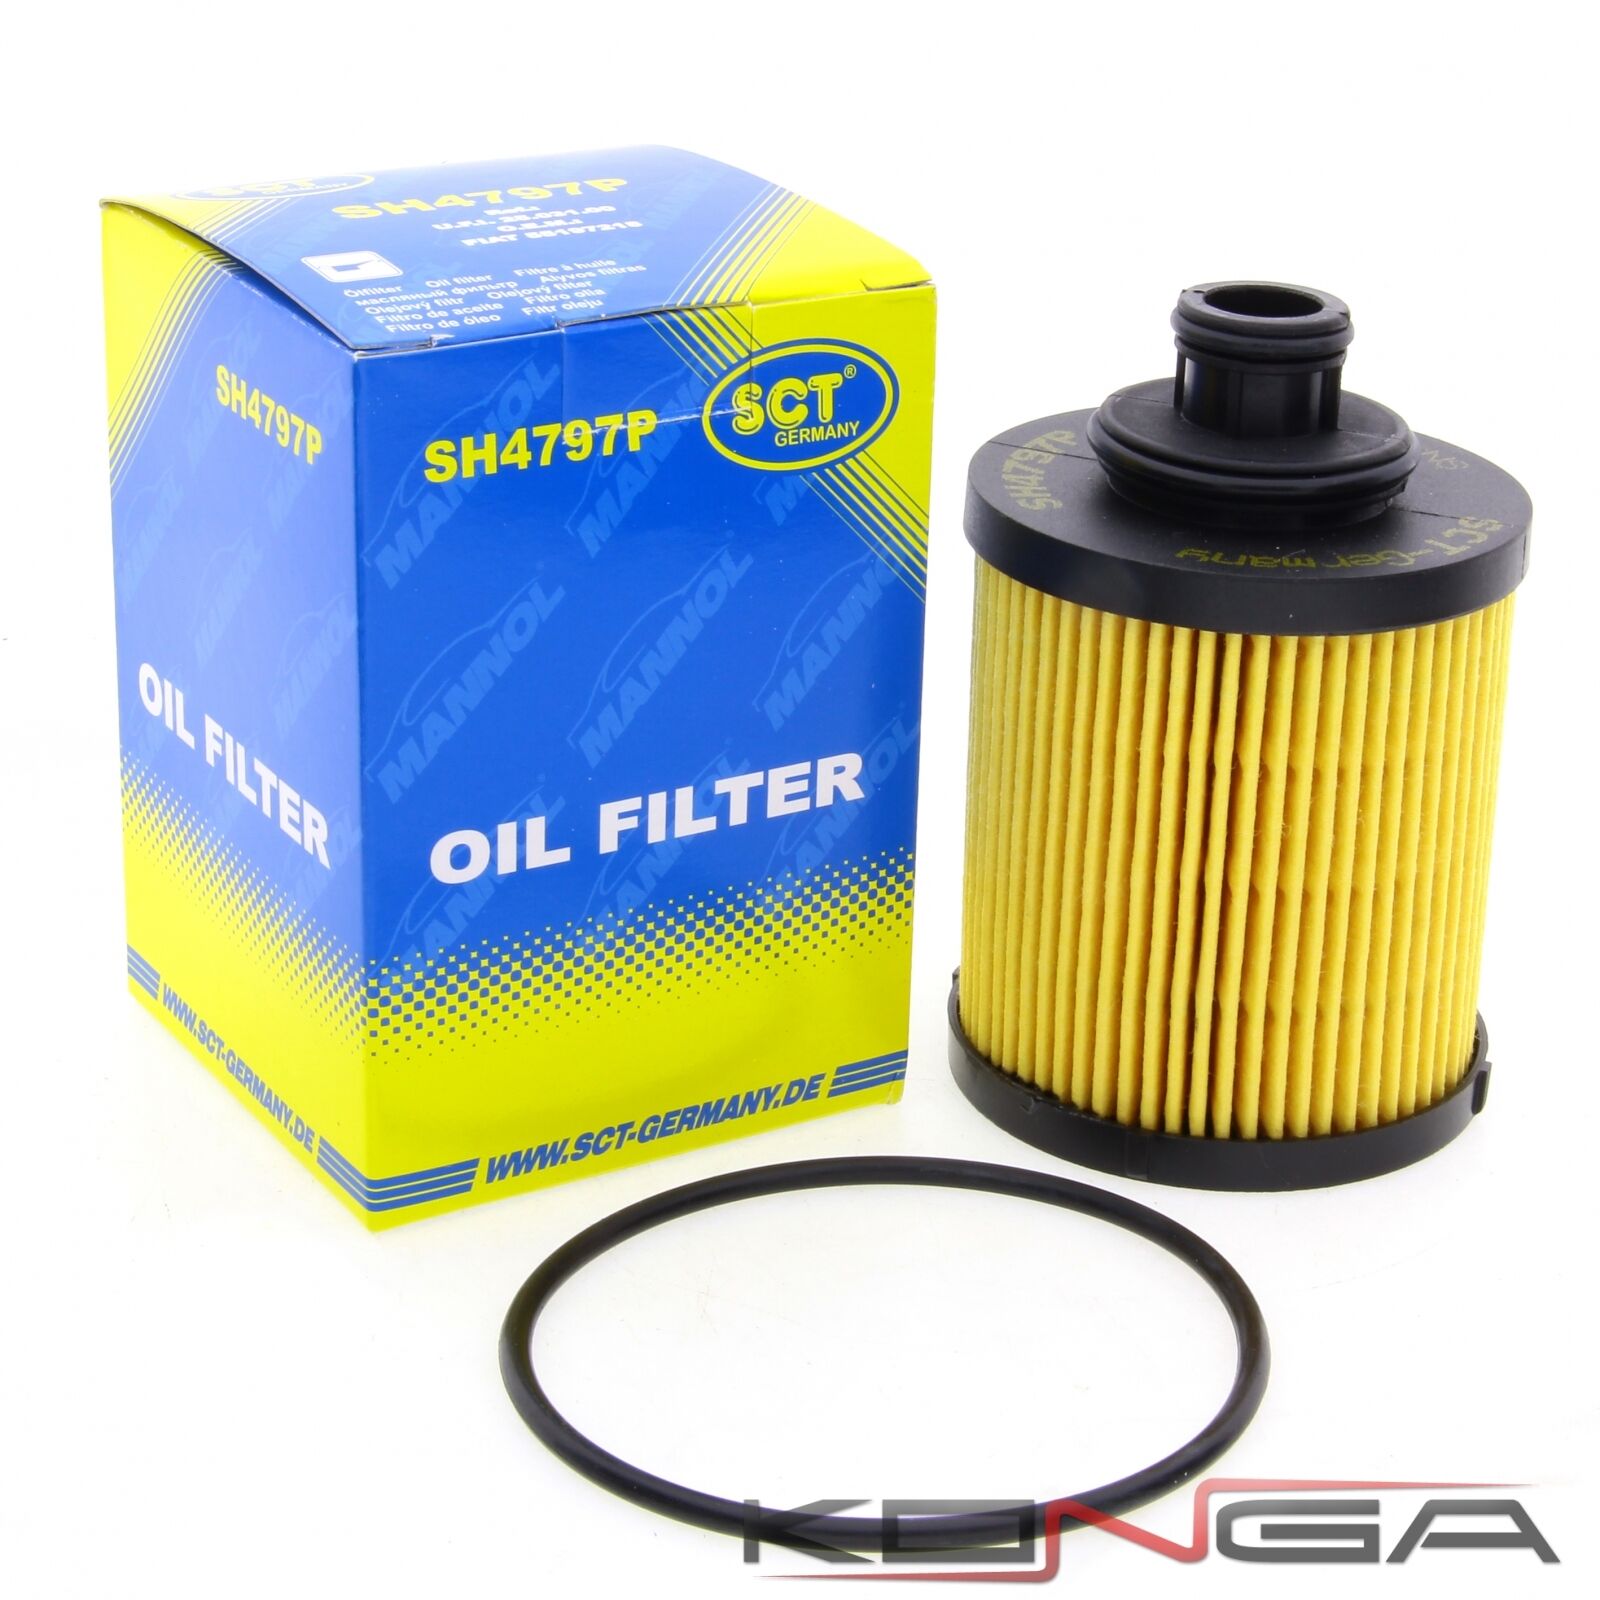 SCT Ölfilter SH4797P Filter Servicefilter Patronenfilter Fiat Suzuki Opel Lancia